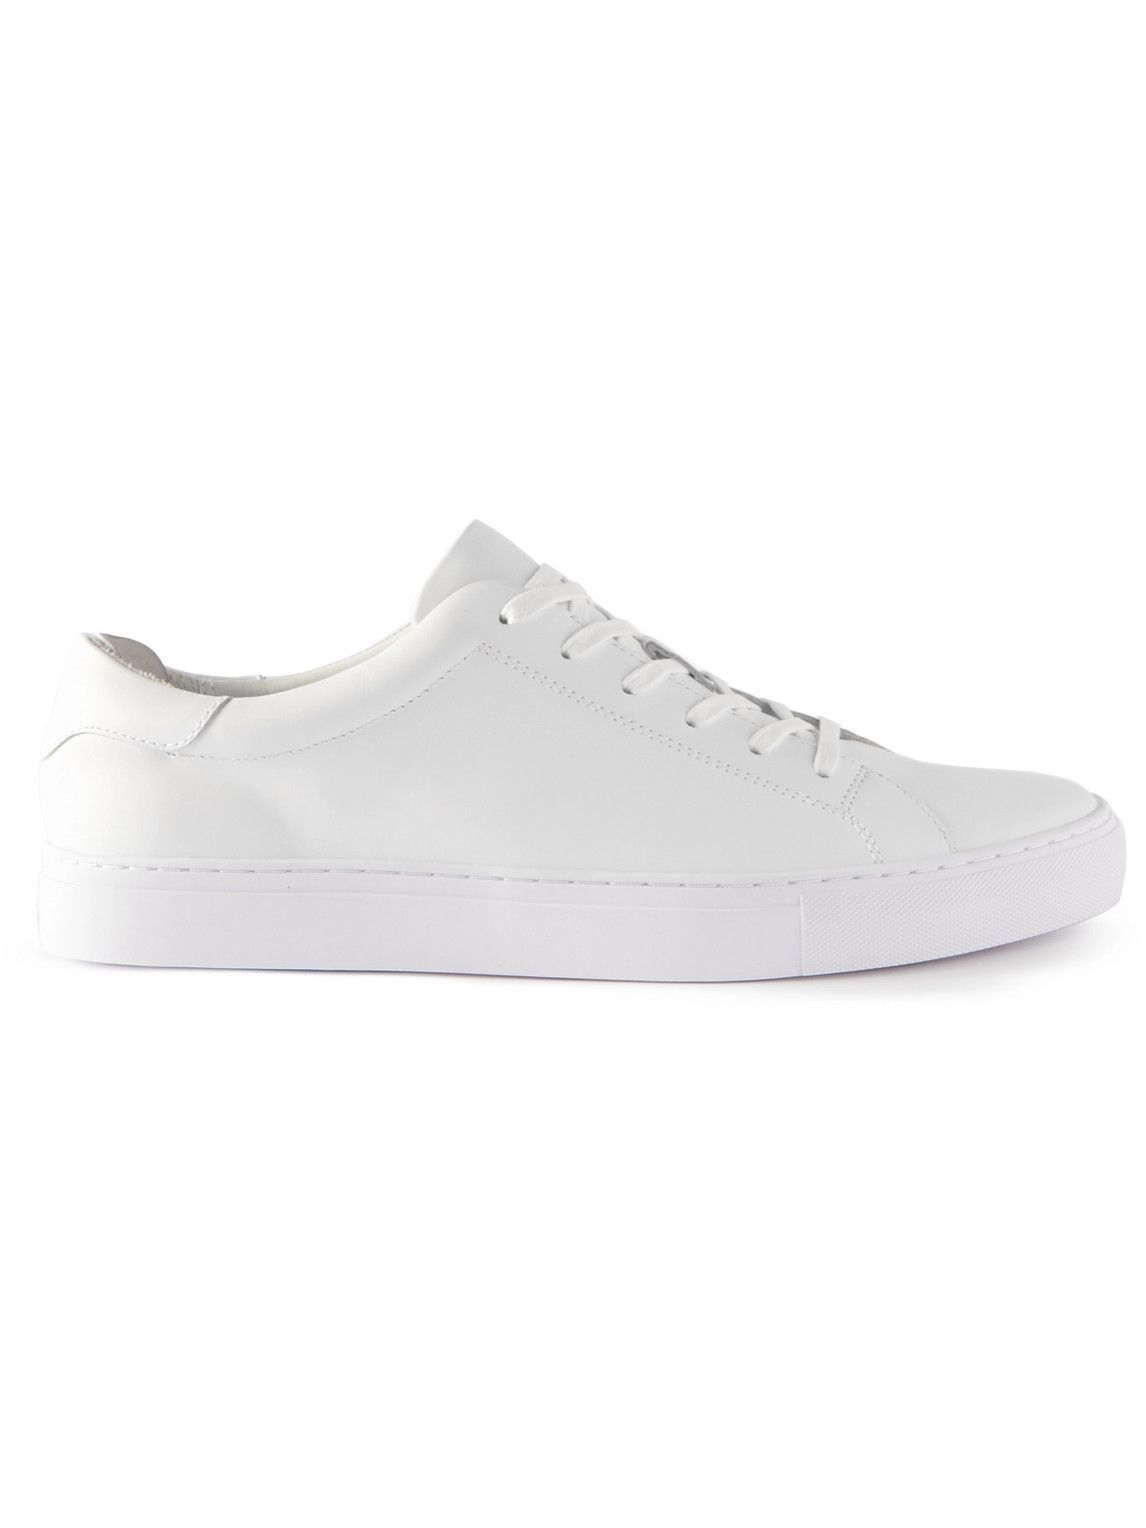 Photo: Polo Ralph Lauren - Jermain II Full-Grain Leather Sneakers - White